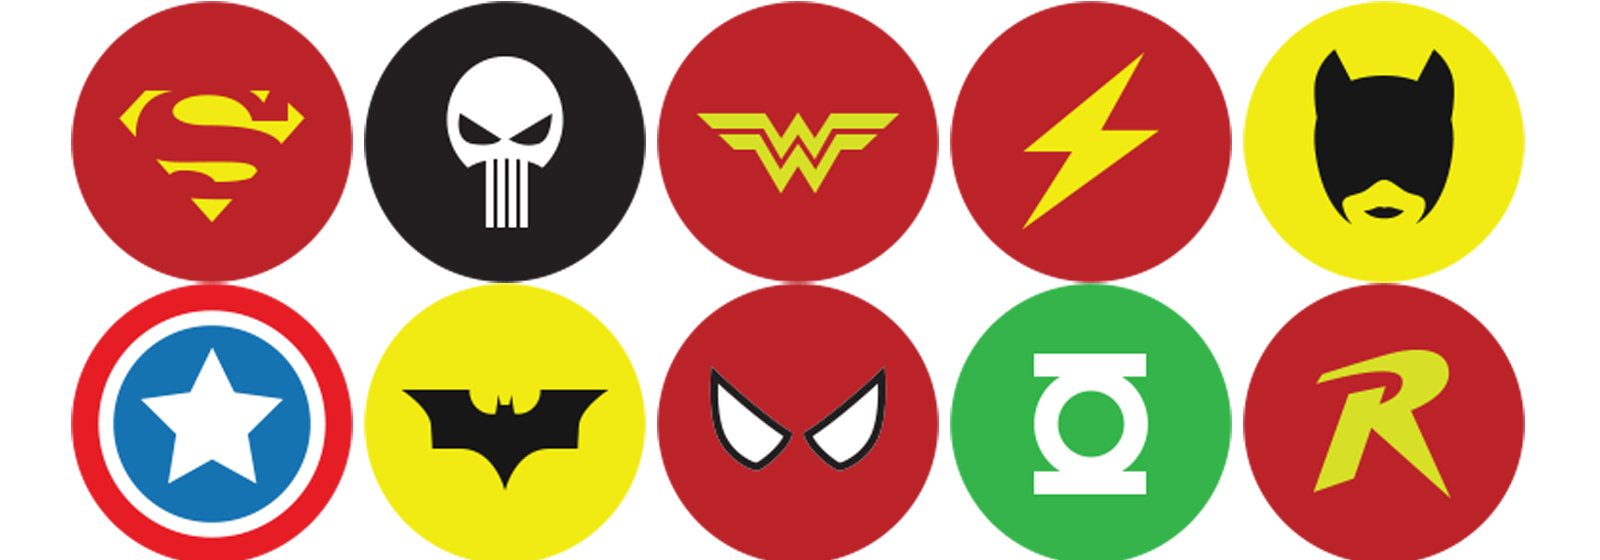 Free Superhero Logo Png, Download Free Clip Art, Free Clip.